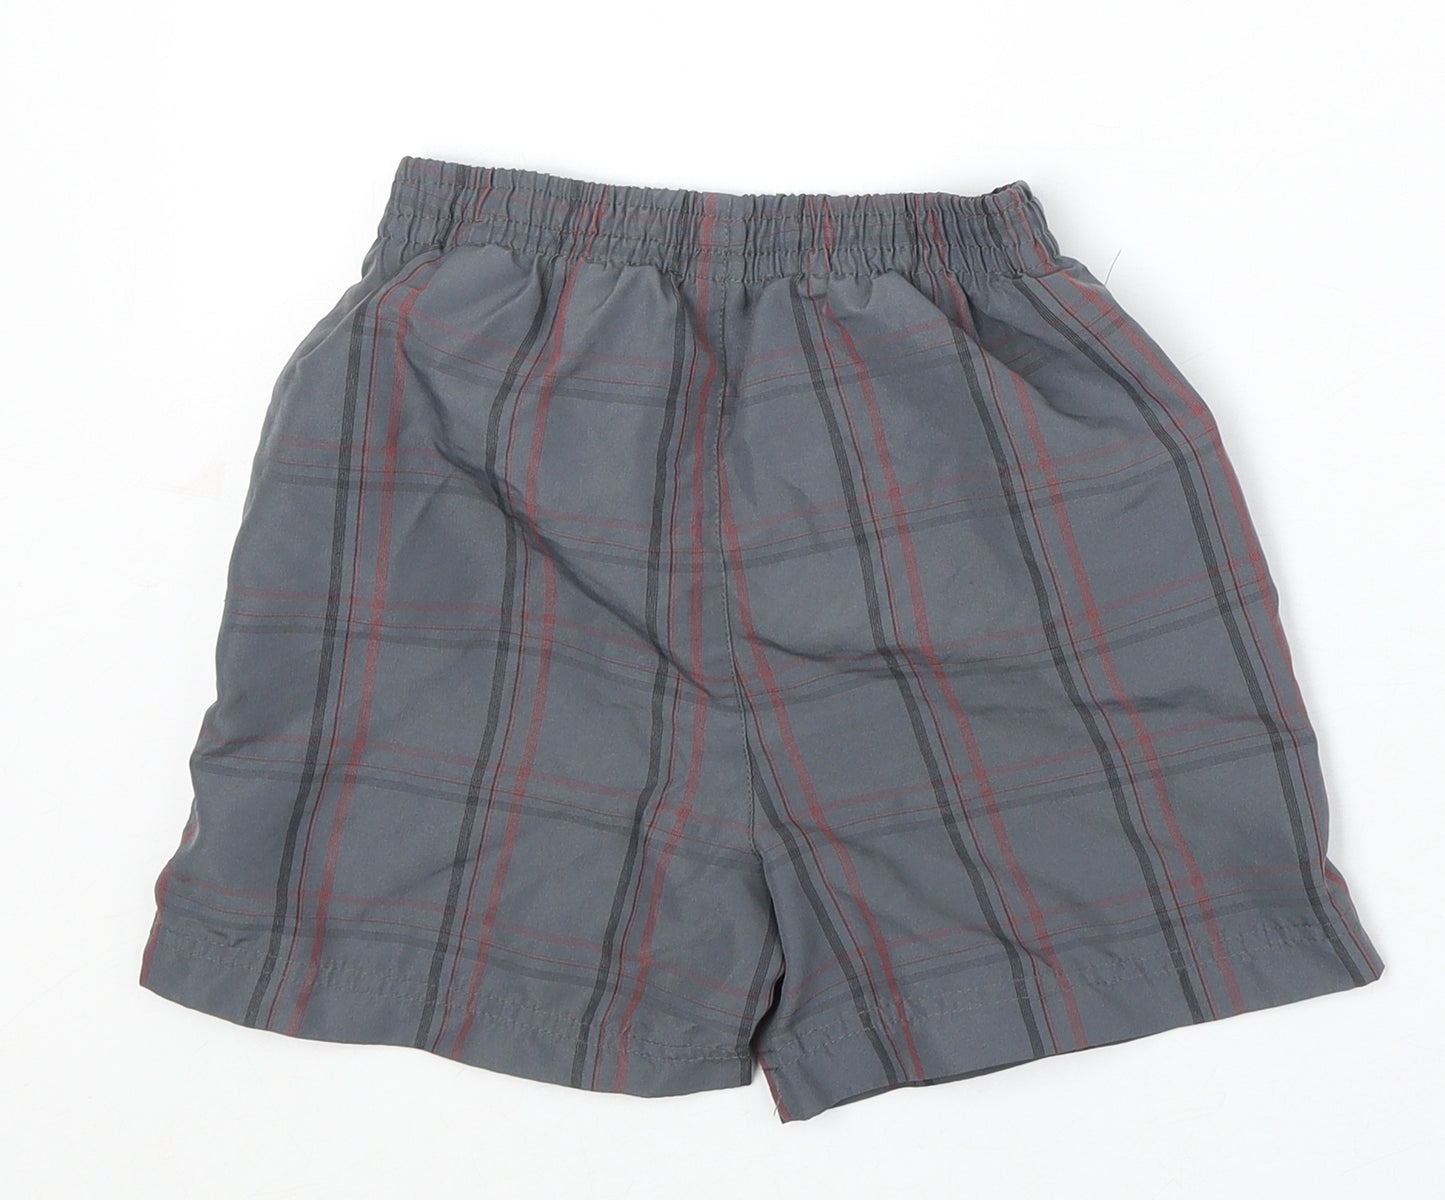 Slazenger Boys Grey Geometric Polyester Sweat Shorts Size 5-6 Years Regular